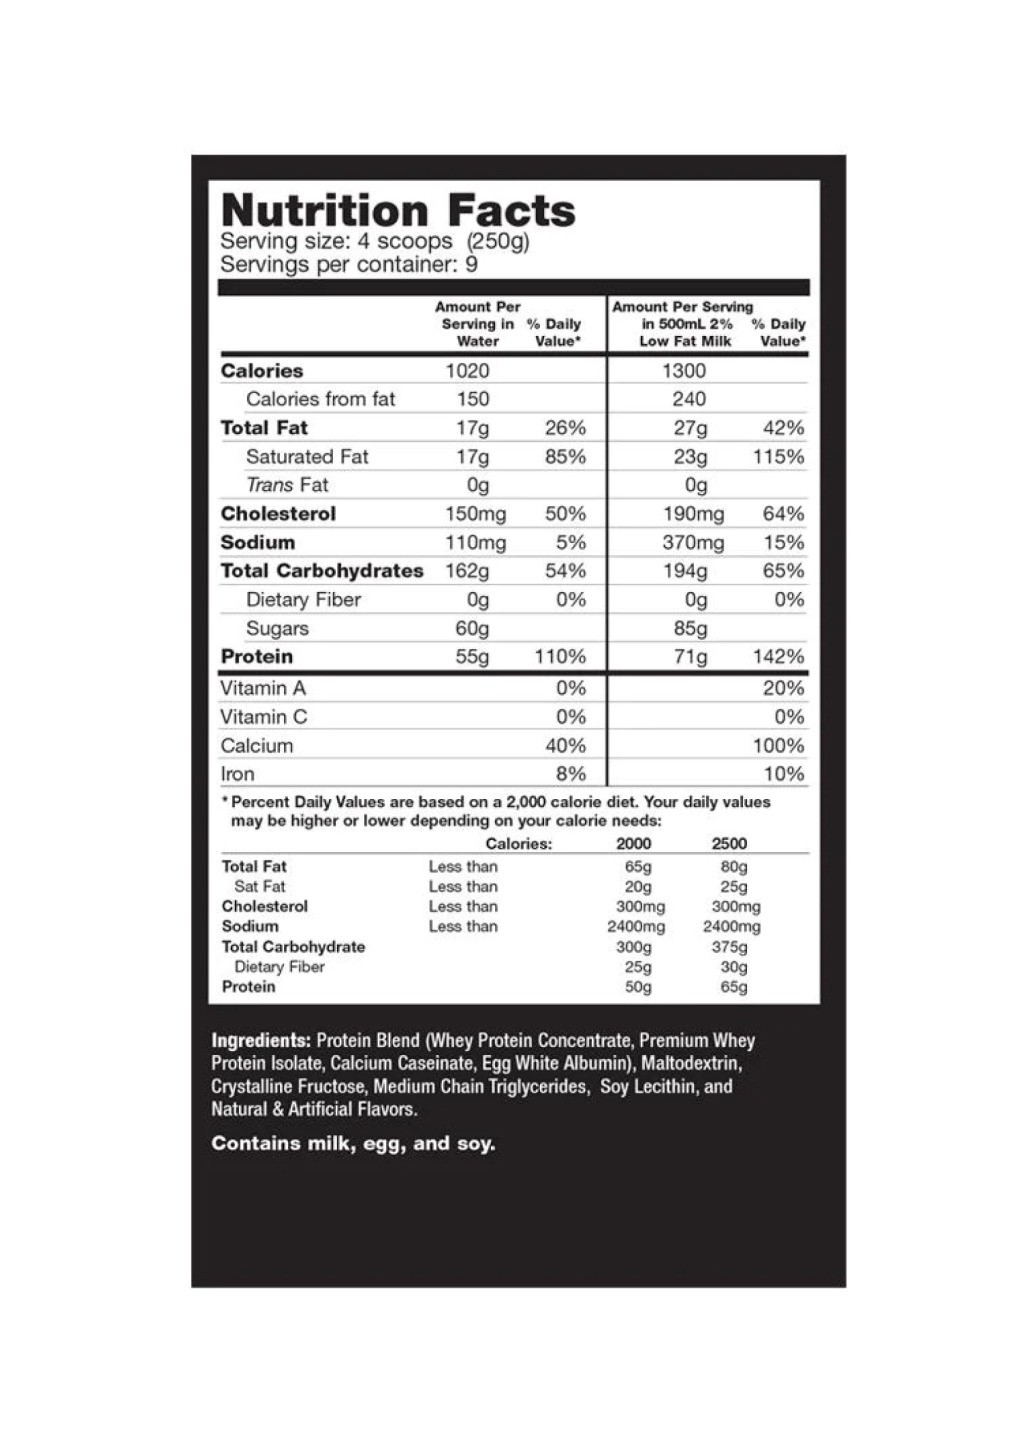 Гейнер для набора мышечной массы Muscle Juice 2544 – 6000g Chocolate Ultimate Nutrition (270007842)